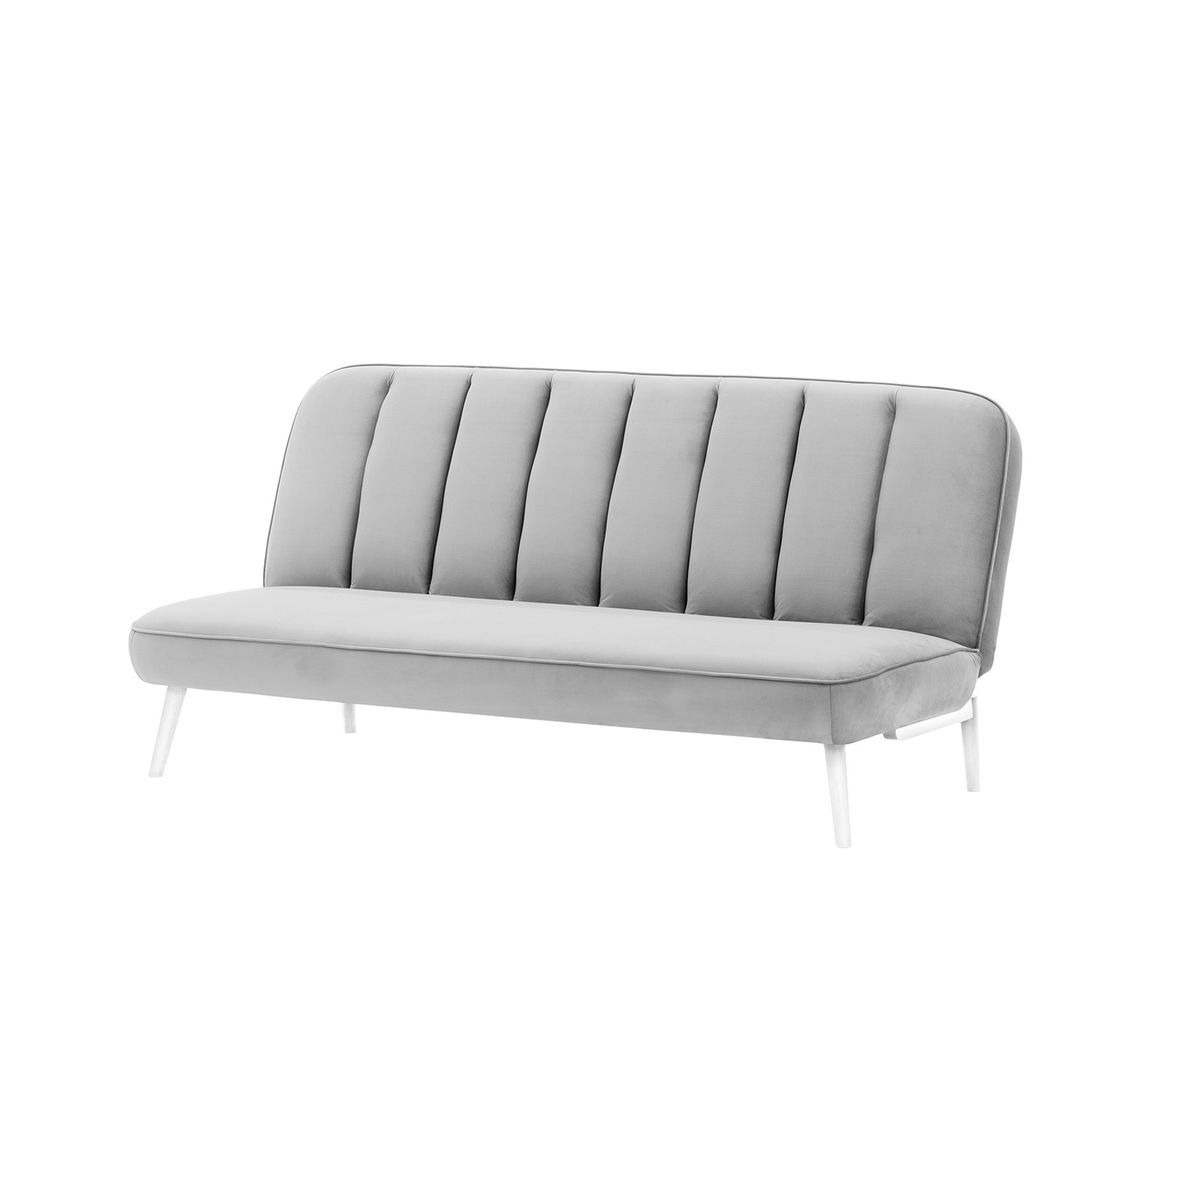 Lull Click-Click Sofa Bed, silver, Leg colour: white - image 1